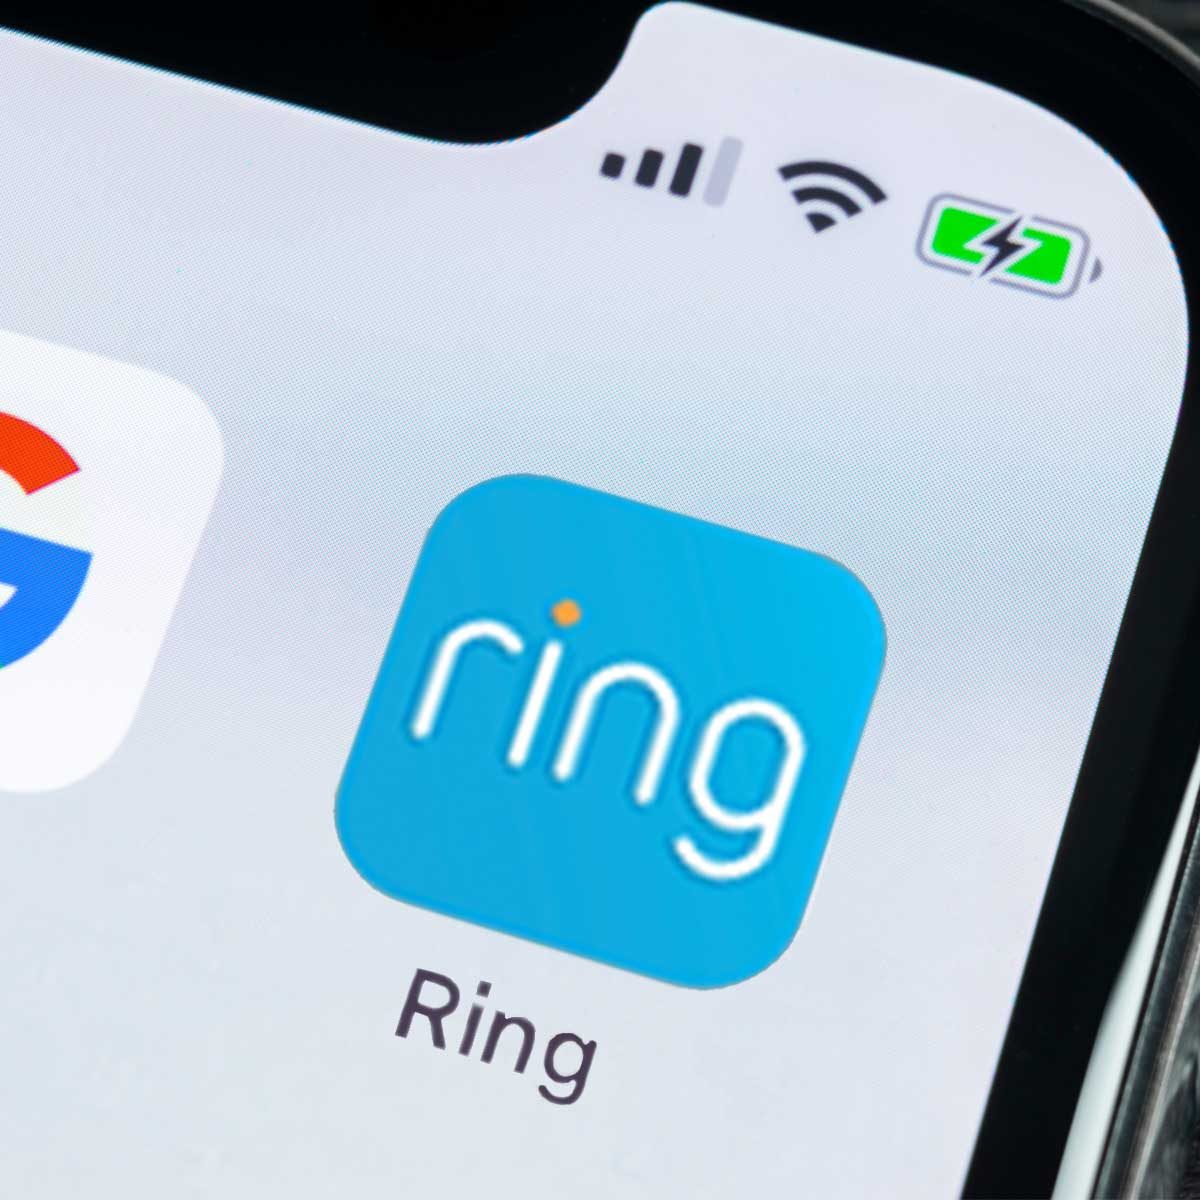 ring video doorbell app on a smart phone